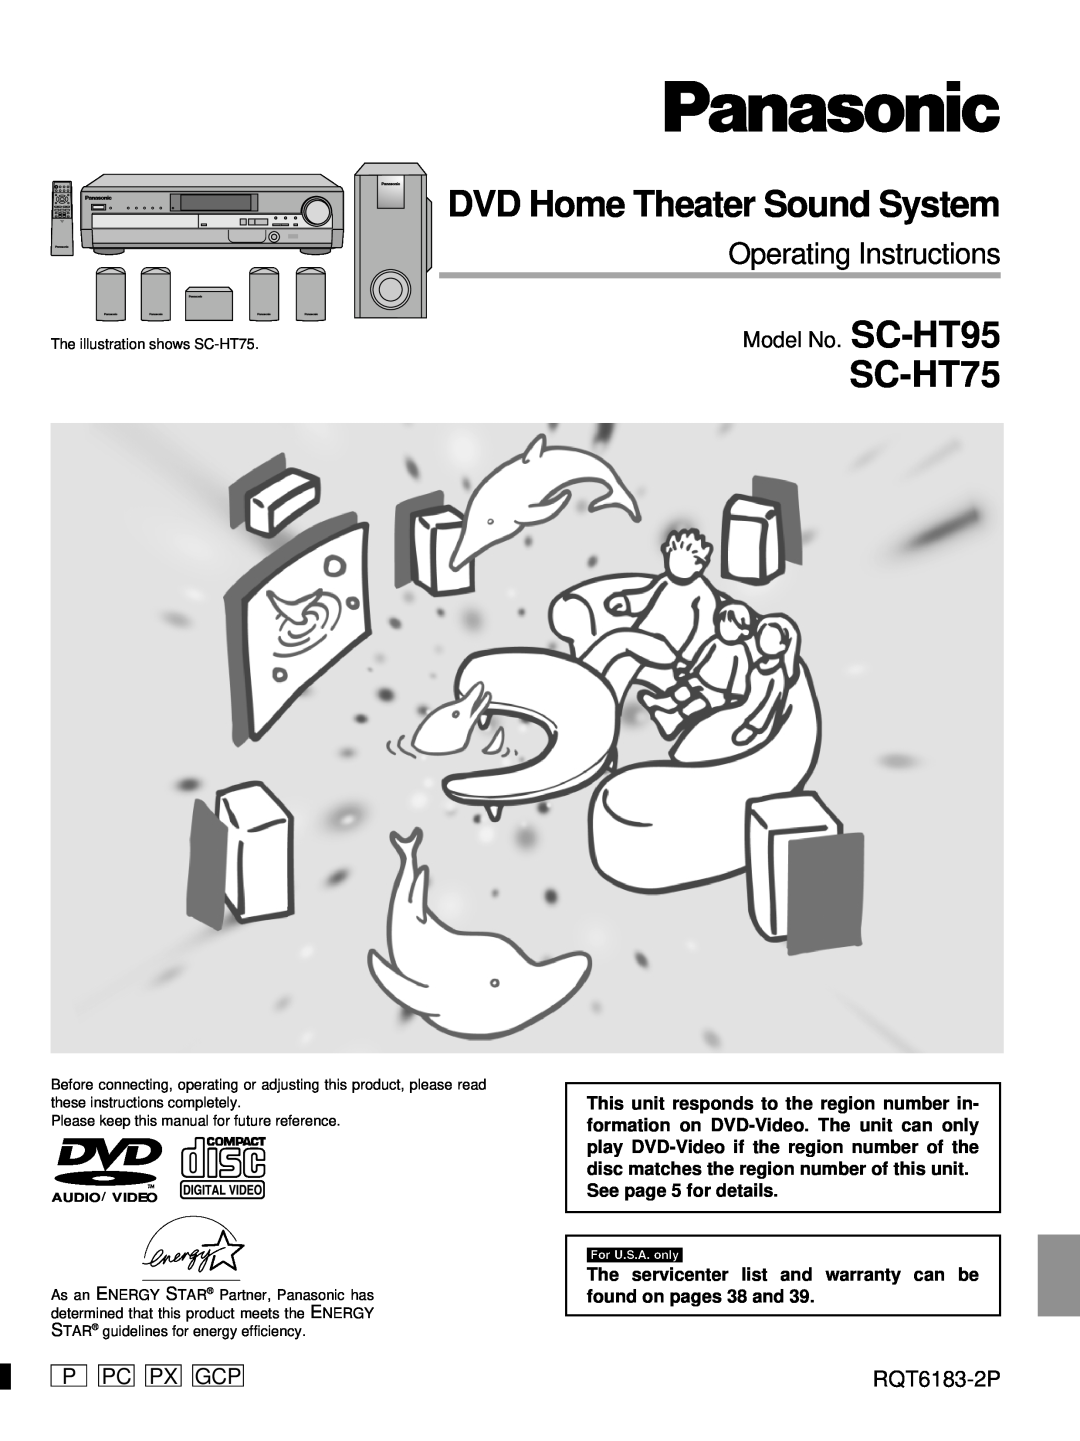 Panasonic SC-HT75 warranty Model No. SC-HT95, P Pc Px Gcp, RQT6183-2P, DVD Home Theater Sound System 